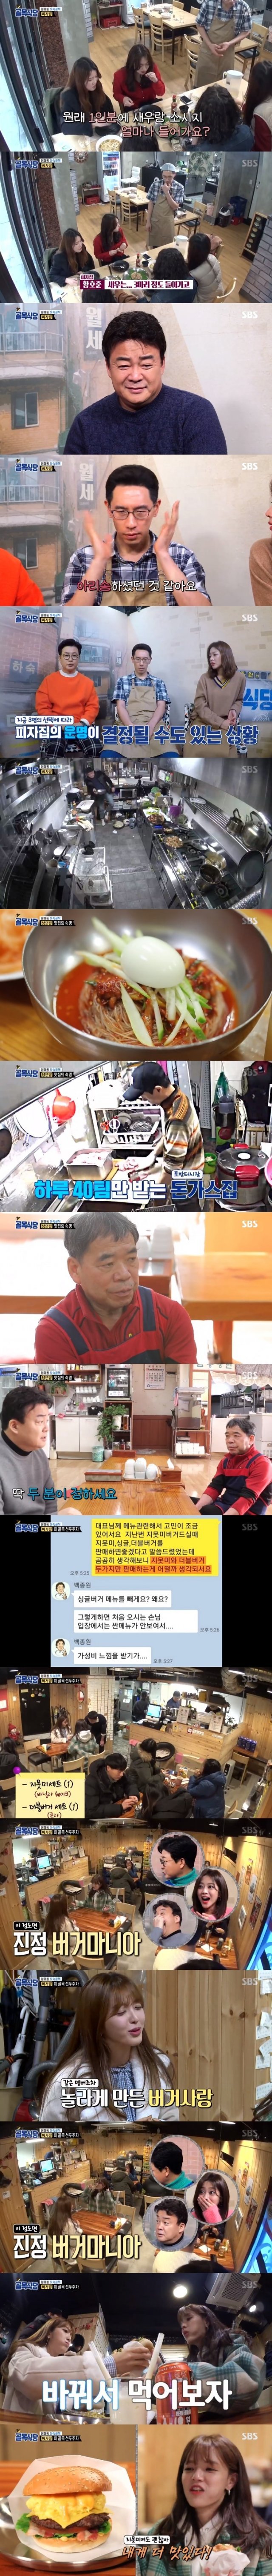 SBS ‘골목식당’ 캡처ⓒ News1